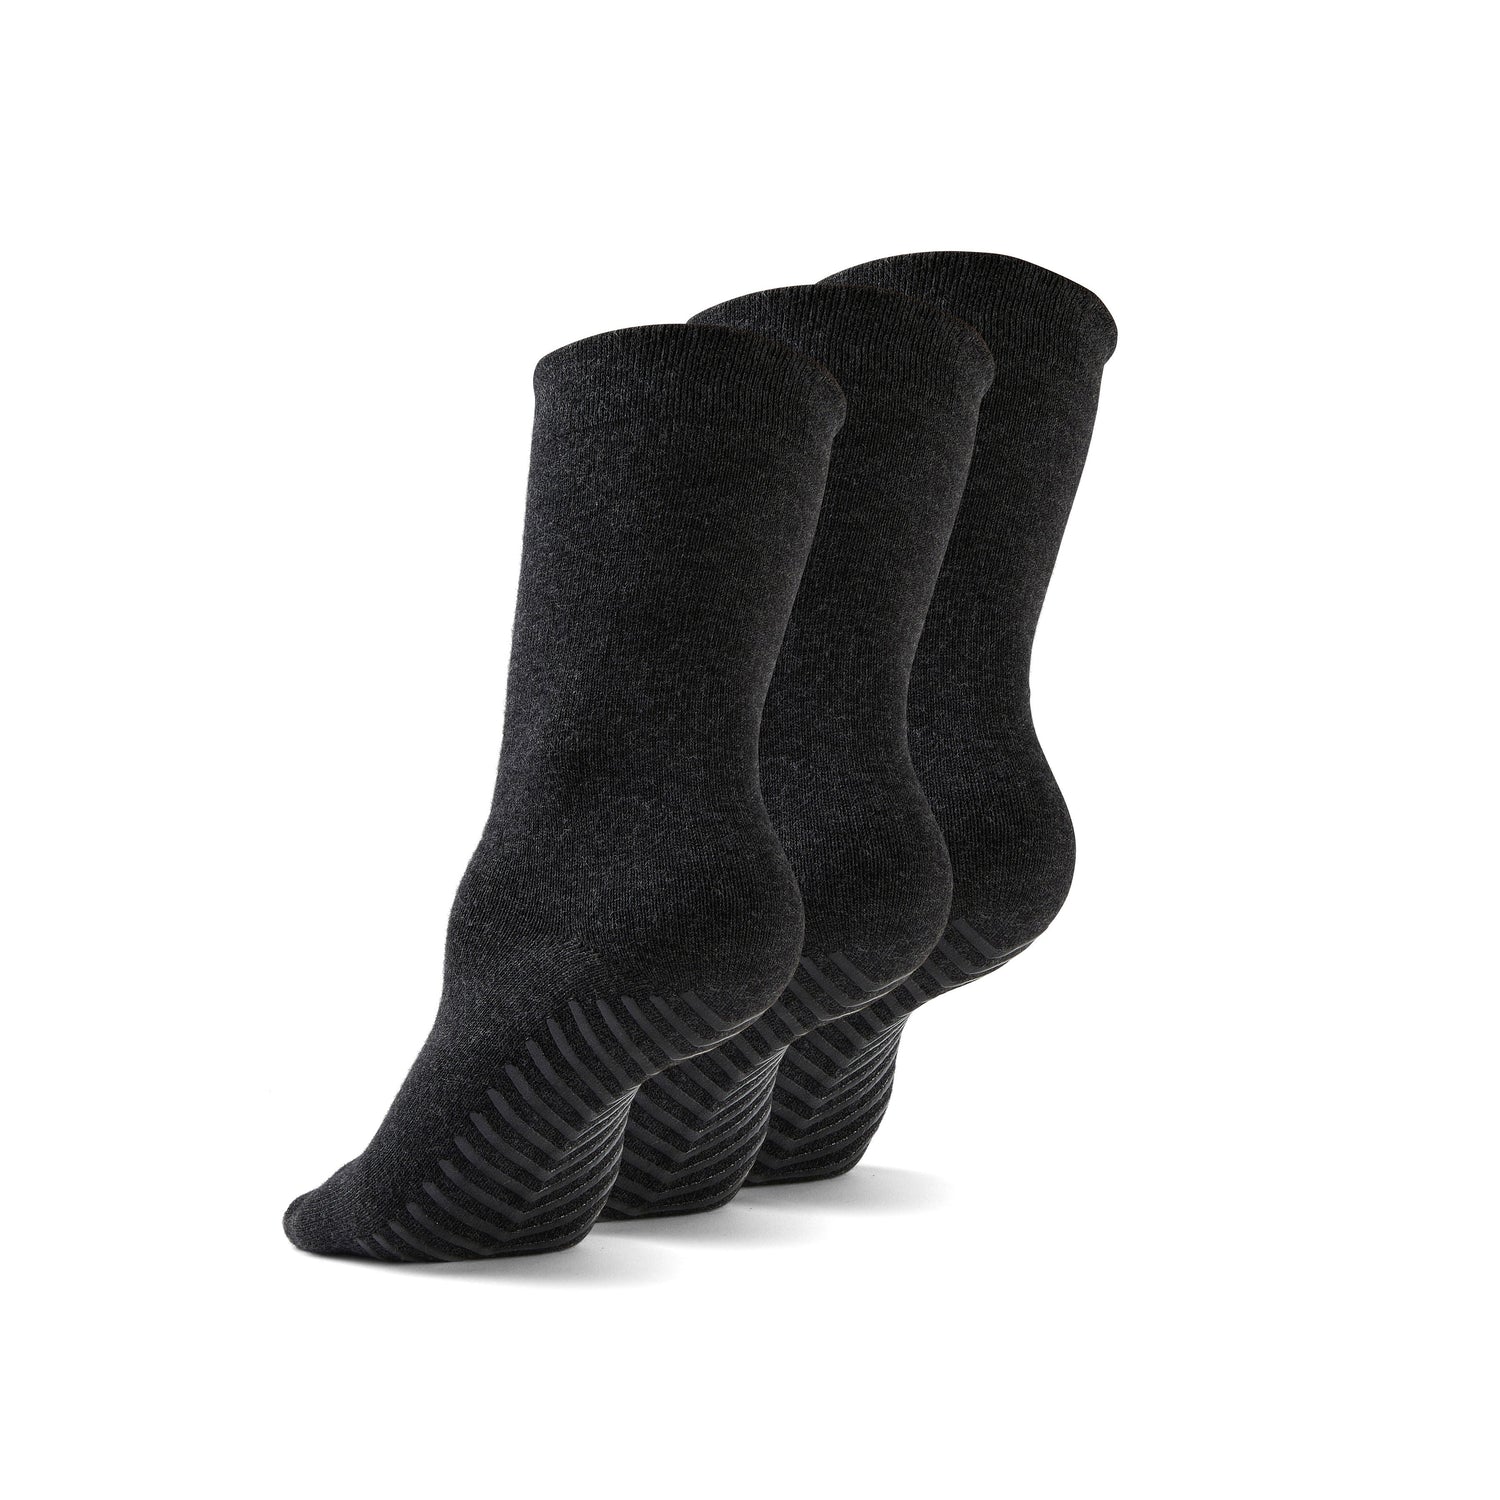 Dark grey anti slip socks made of soft cotton that sit just below the calf.